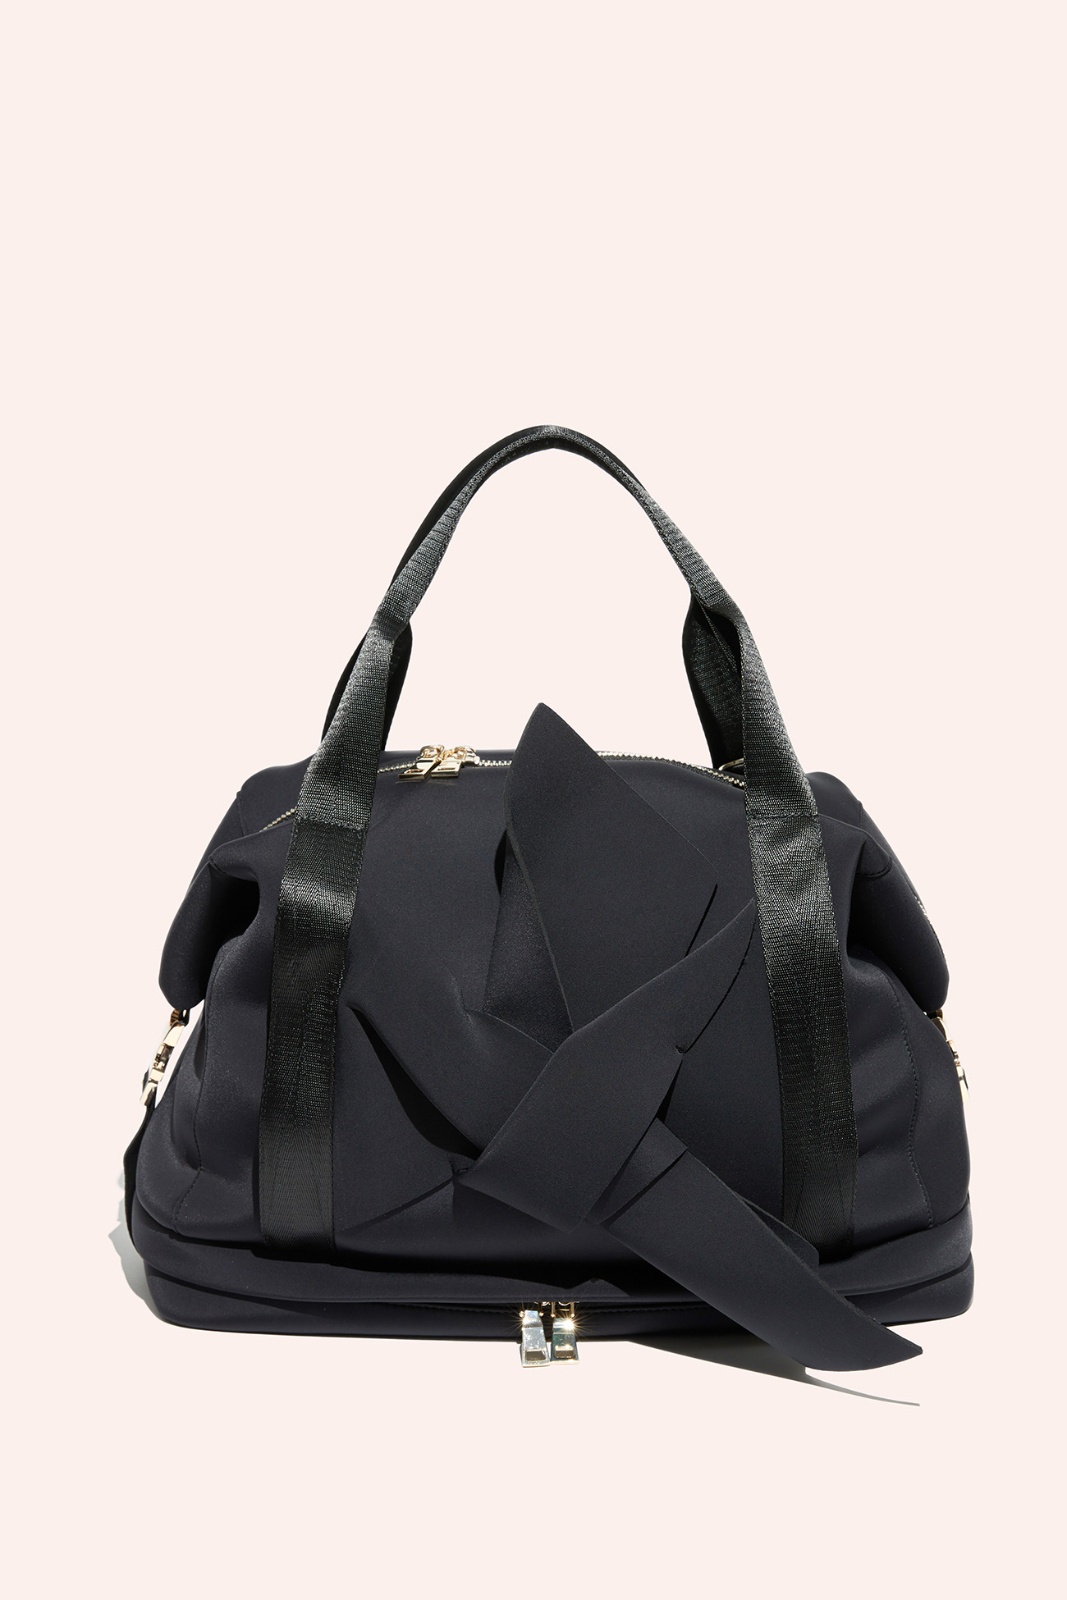 Better go snag it quick bc this price is crazy #fashiondesigner #targ... |  blogilates mini backpack | TikTok